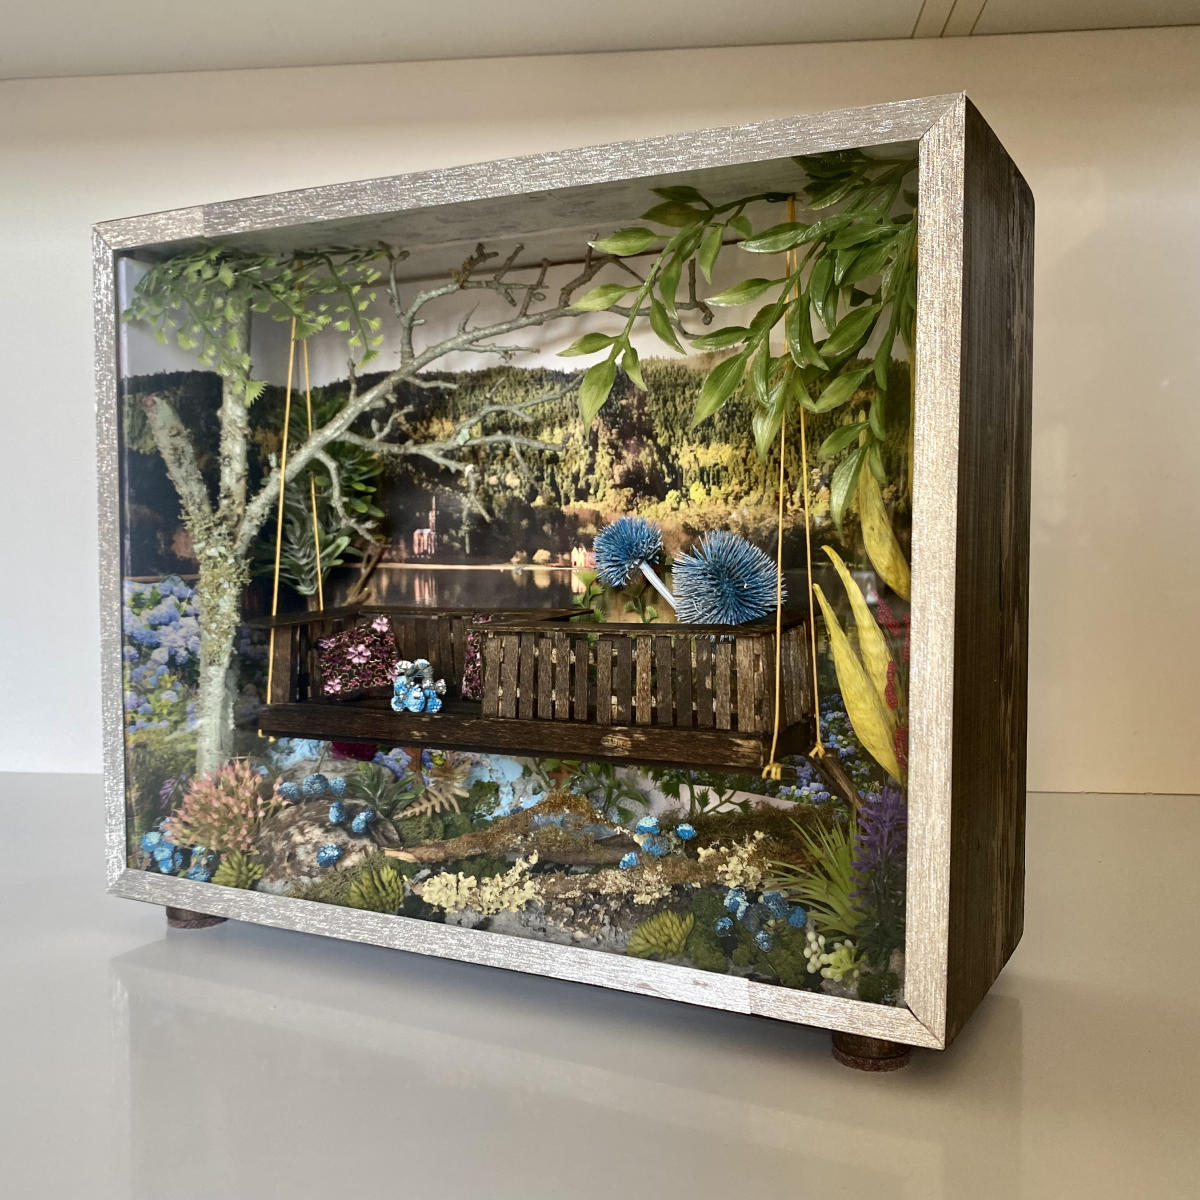 "The Azores Box | A multimedia diorama | 14" X 11.5" X 6"